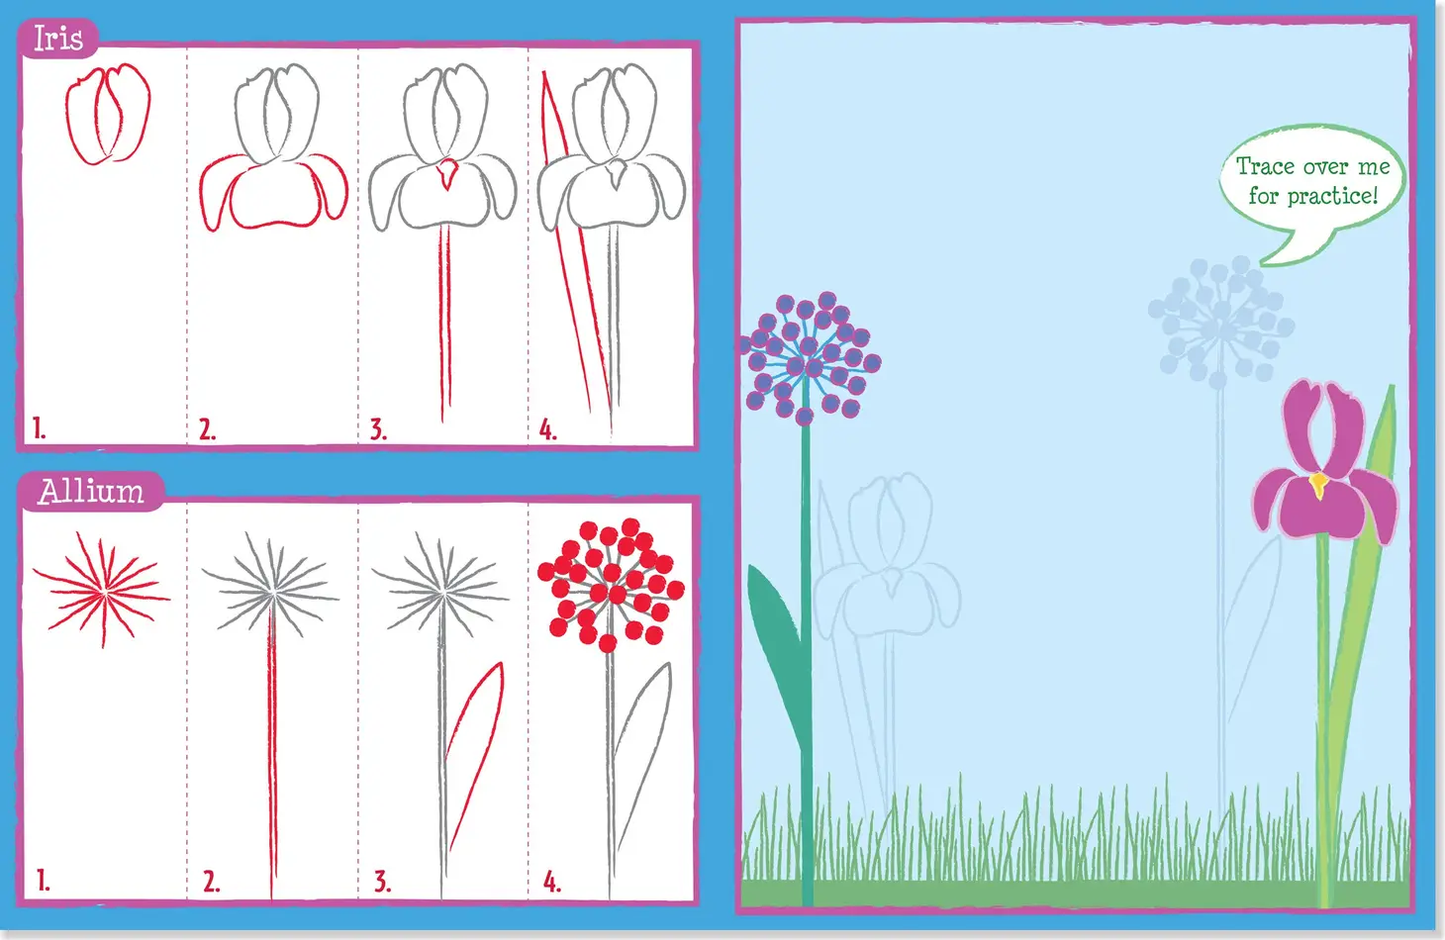 Learn To Draw … Flower Garden!